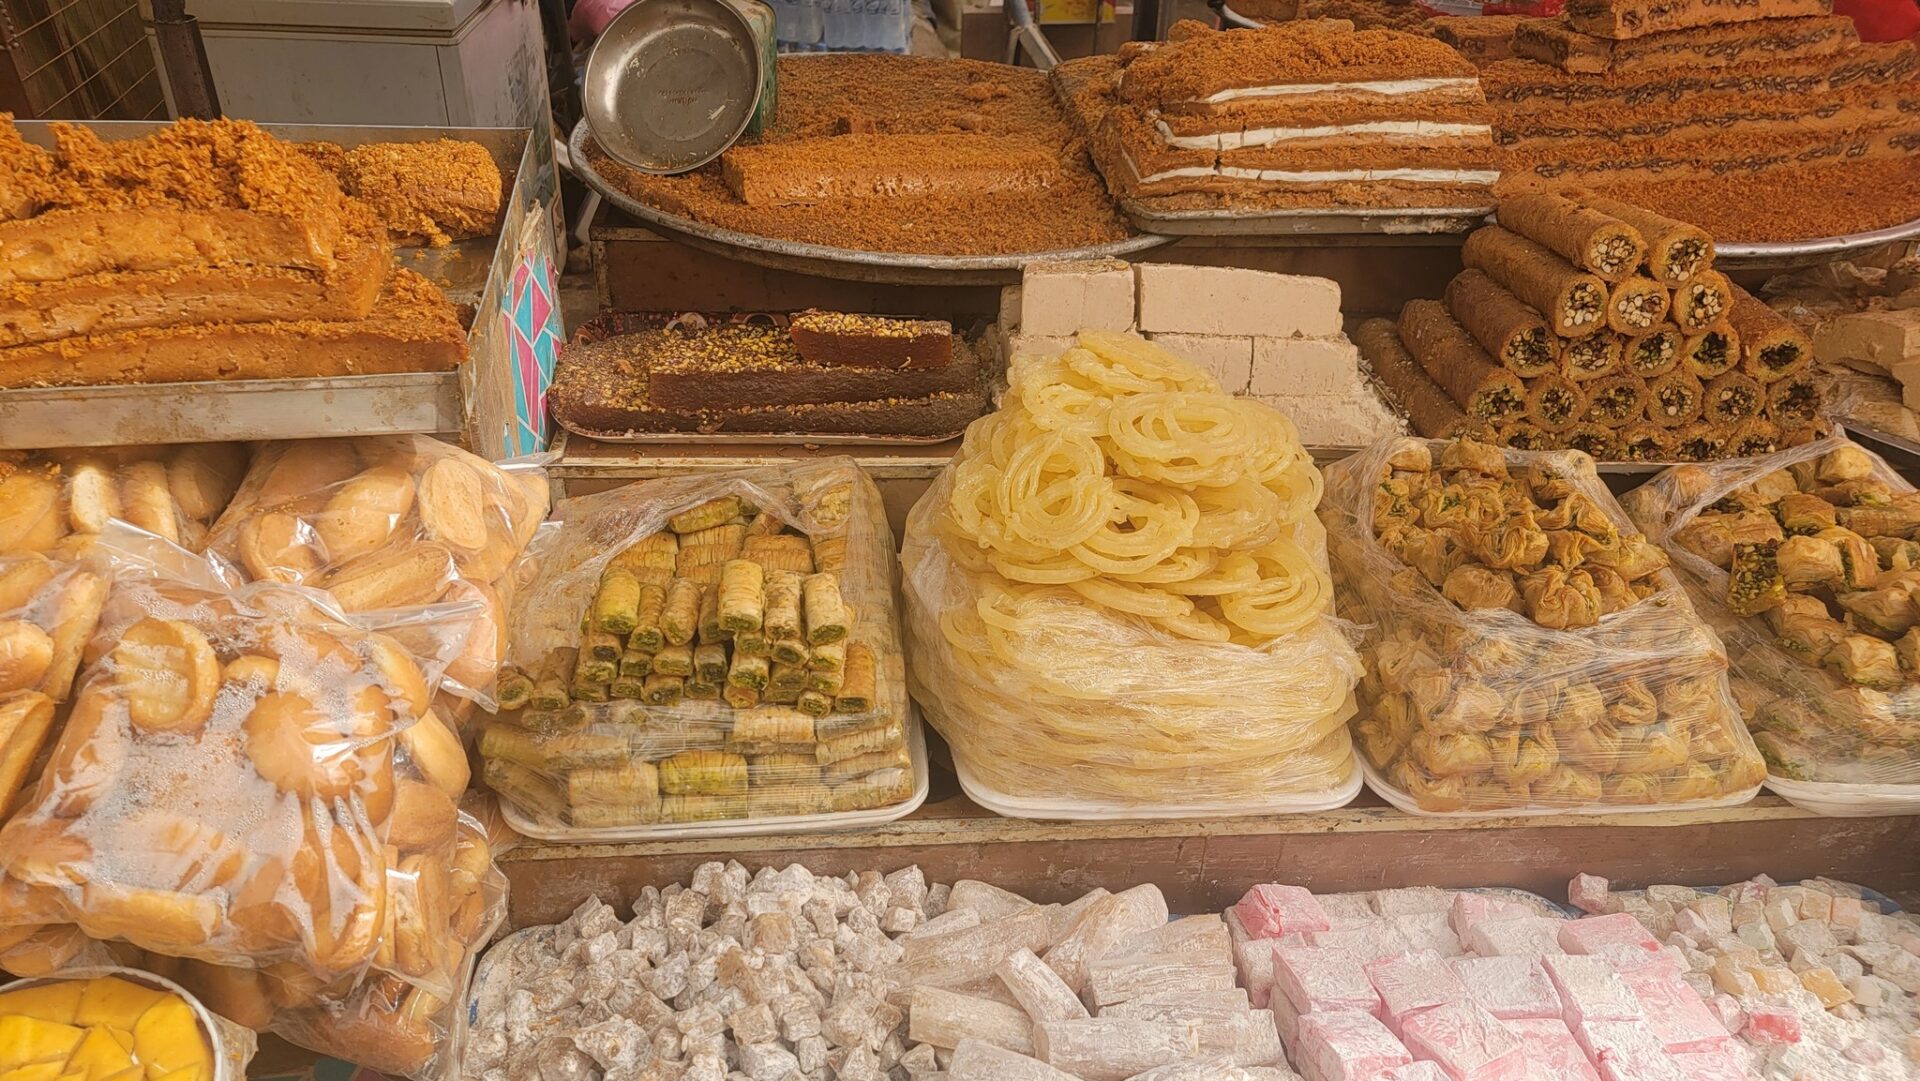 a display of various foods